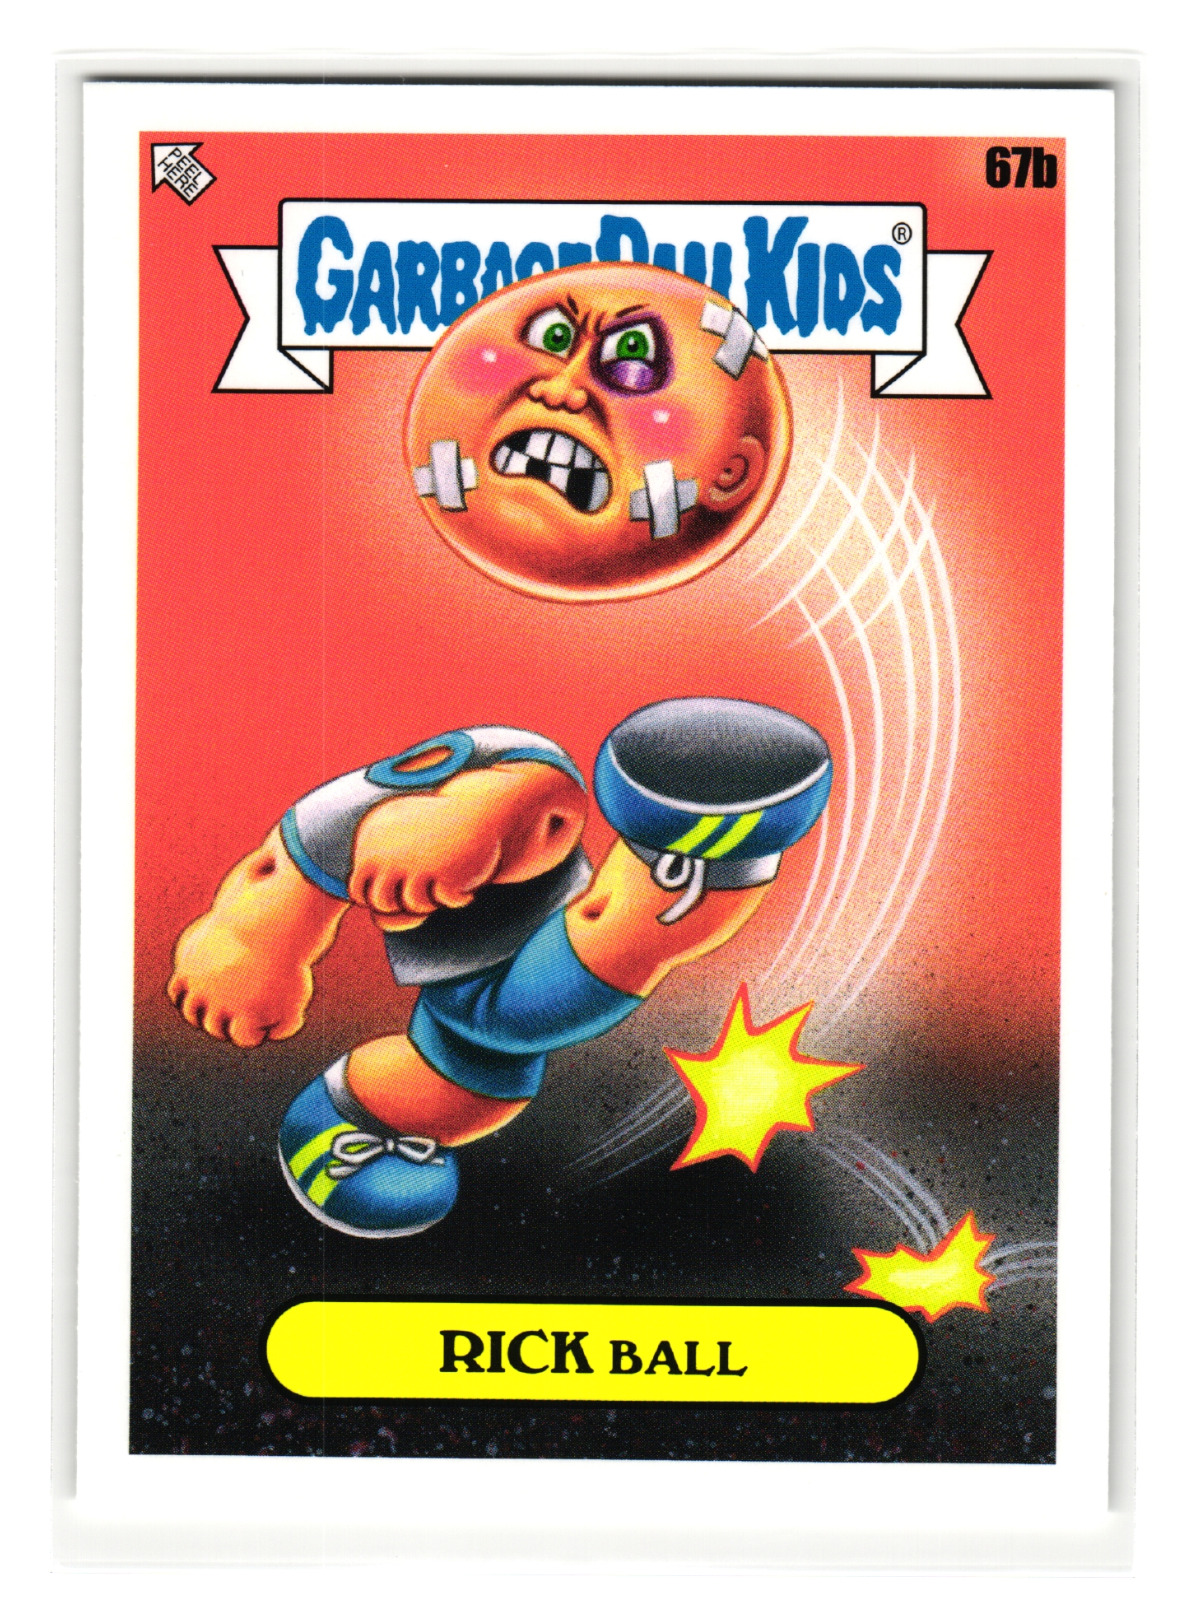 Rick Ball 2020 Topps Garbage Pail Kids Series 1 Parody Sticker Card 67b